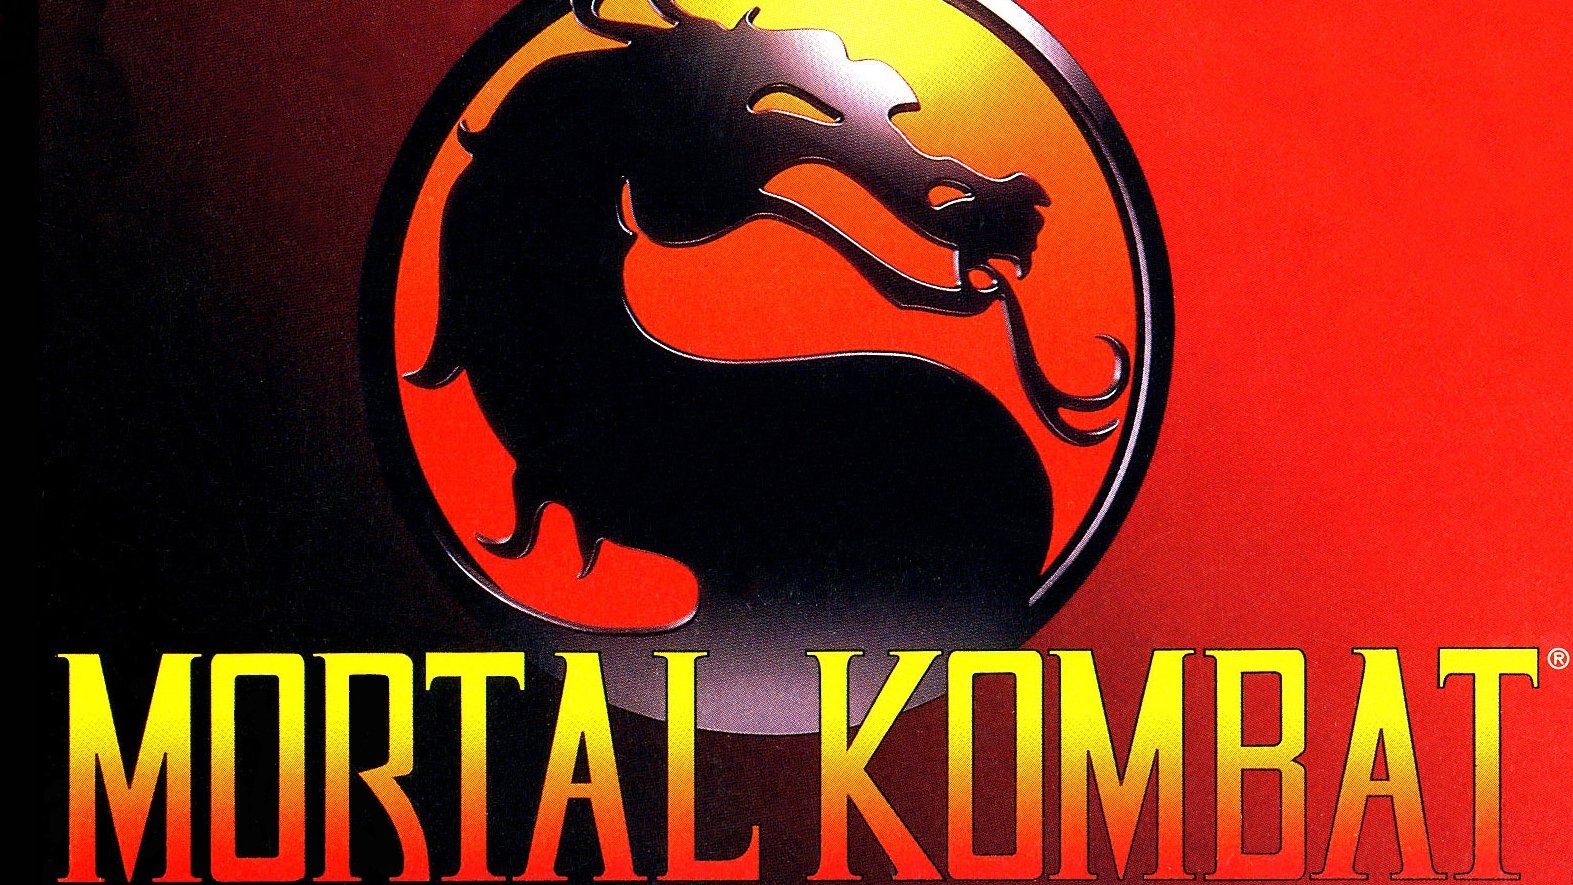 Mortal Kombat Games Getting Remastered?